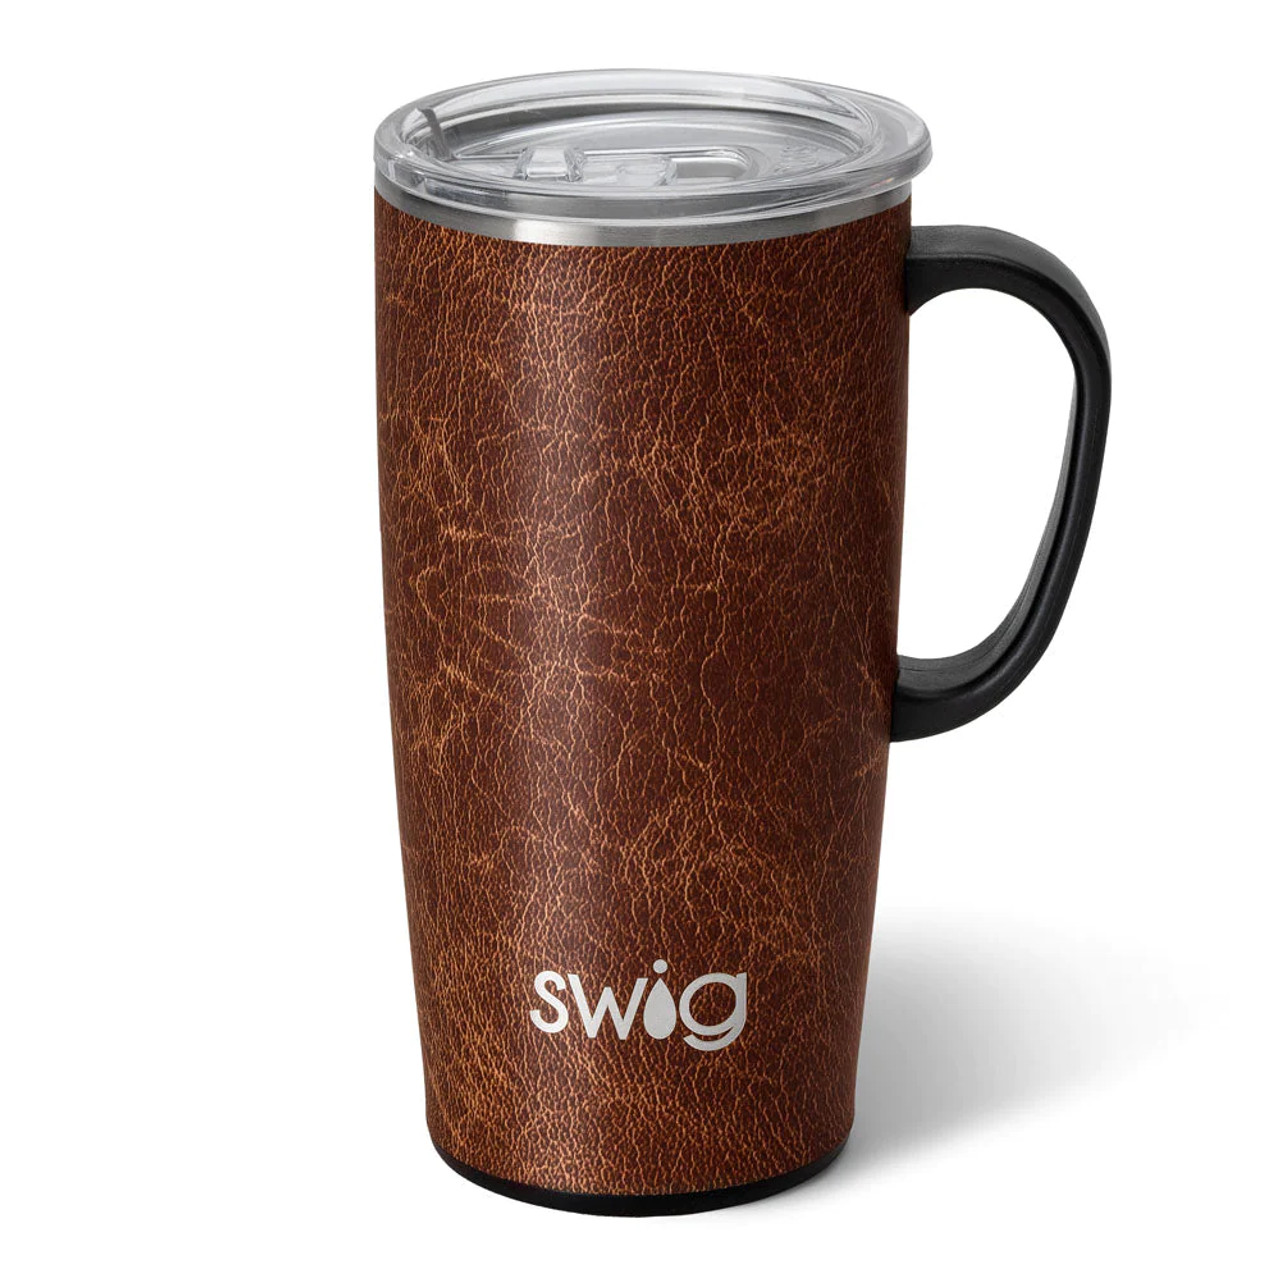 Swig Love All Travel Mug 22oz